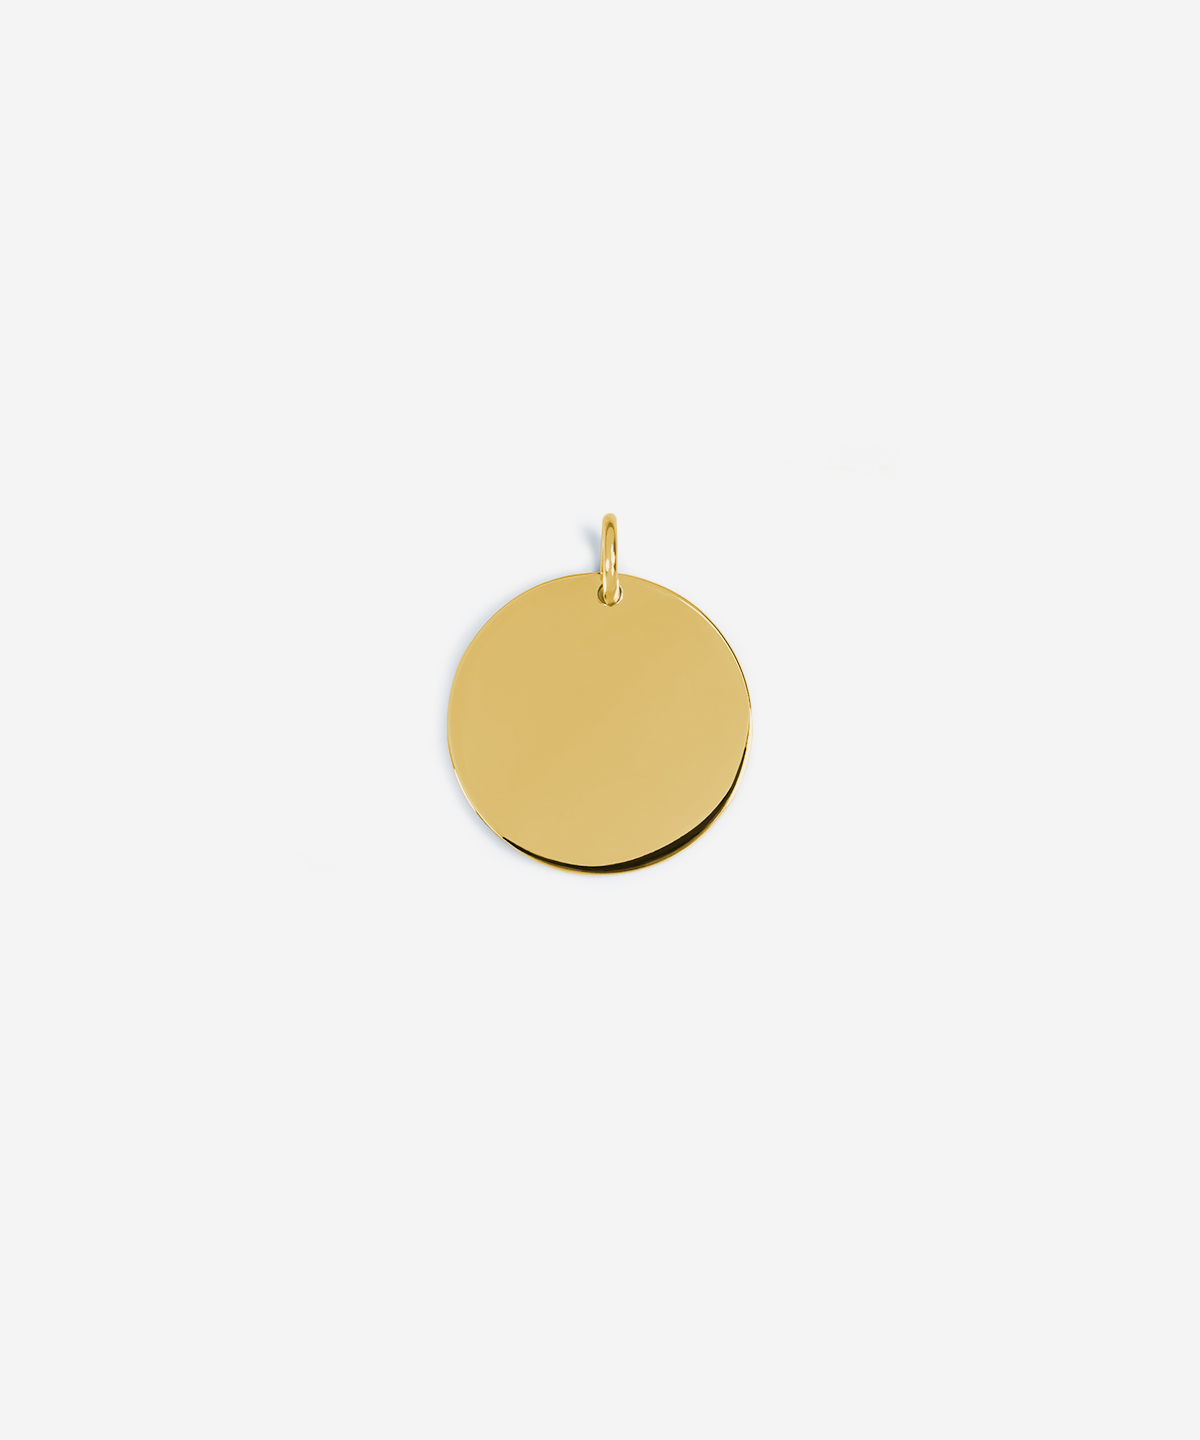 Round golden pendant 